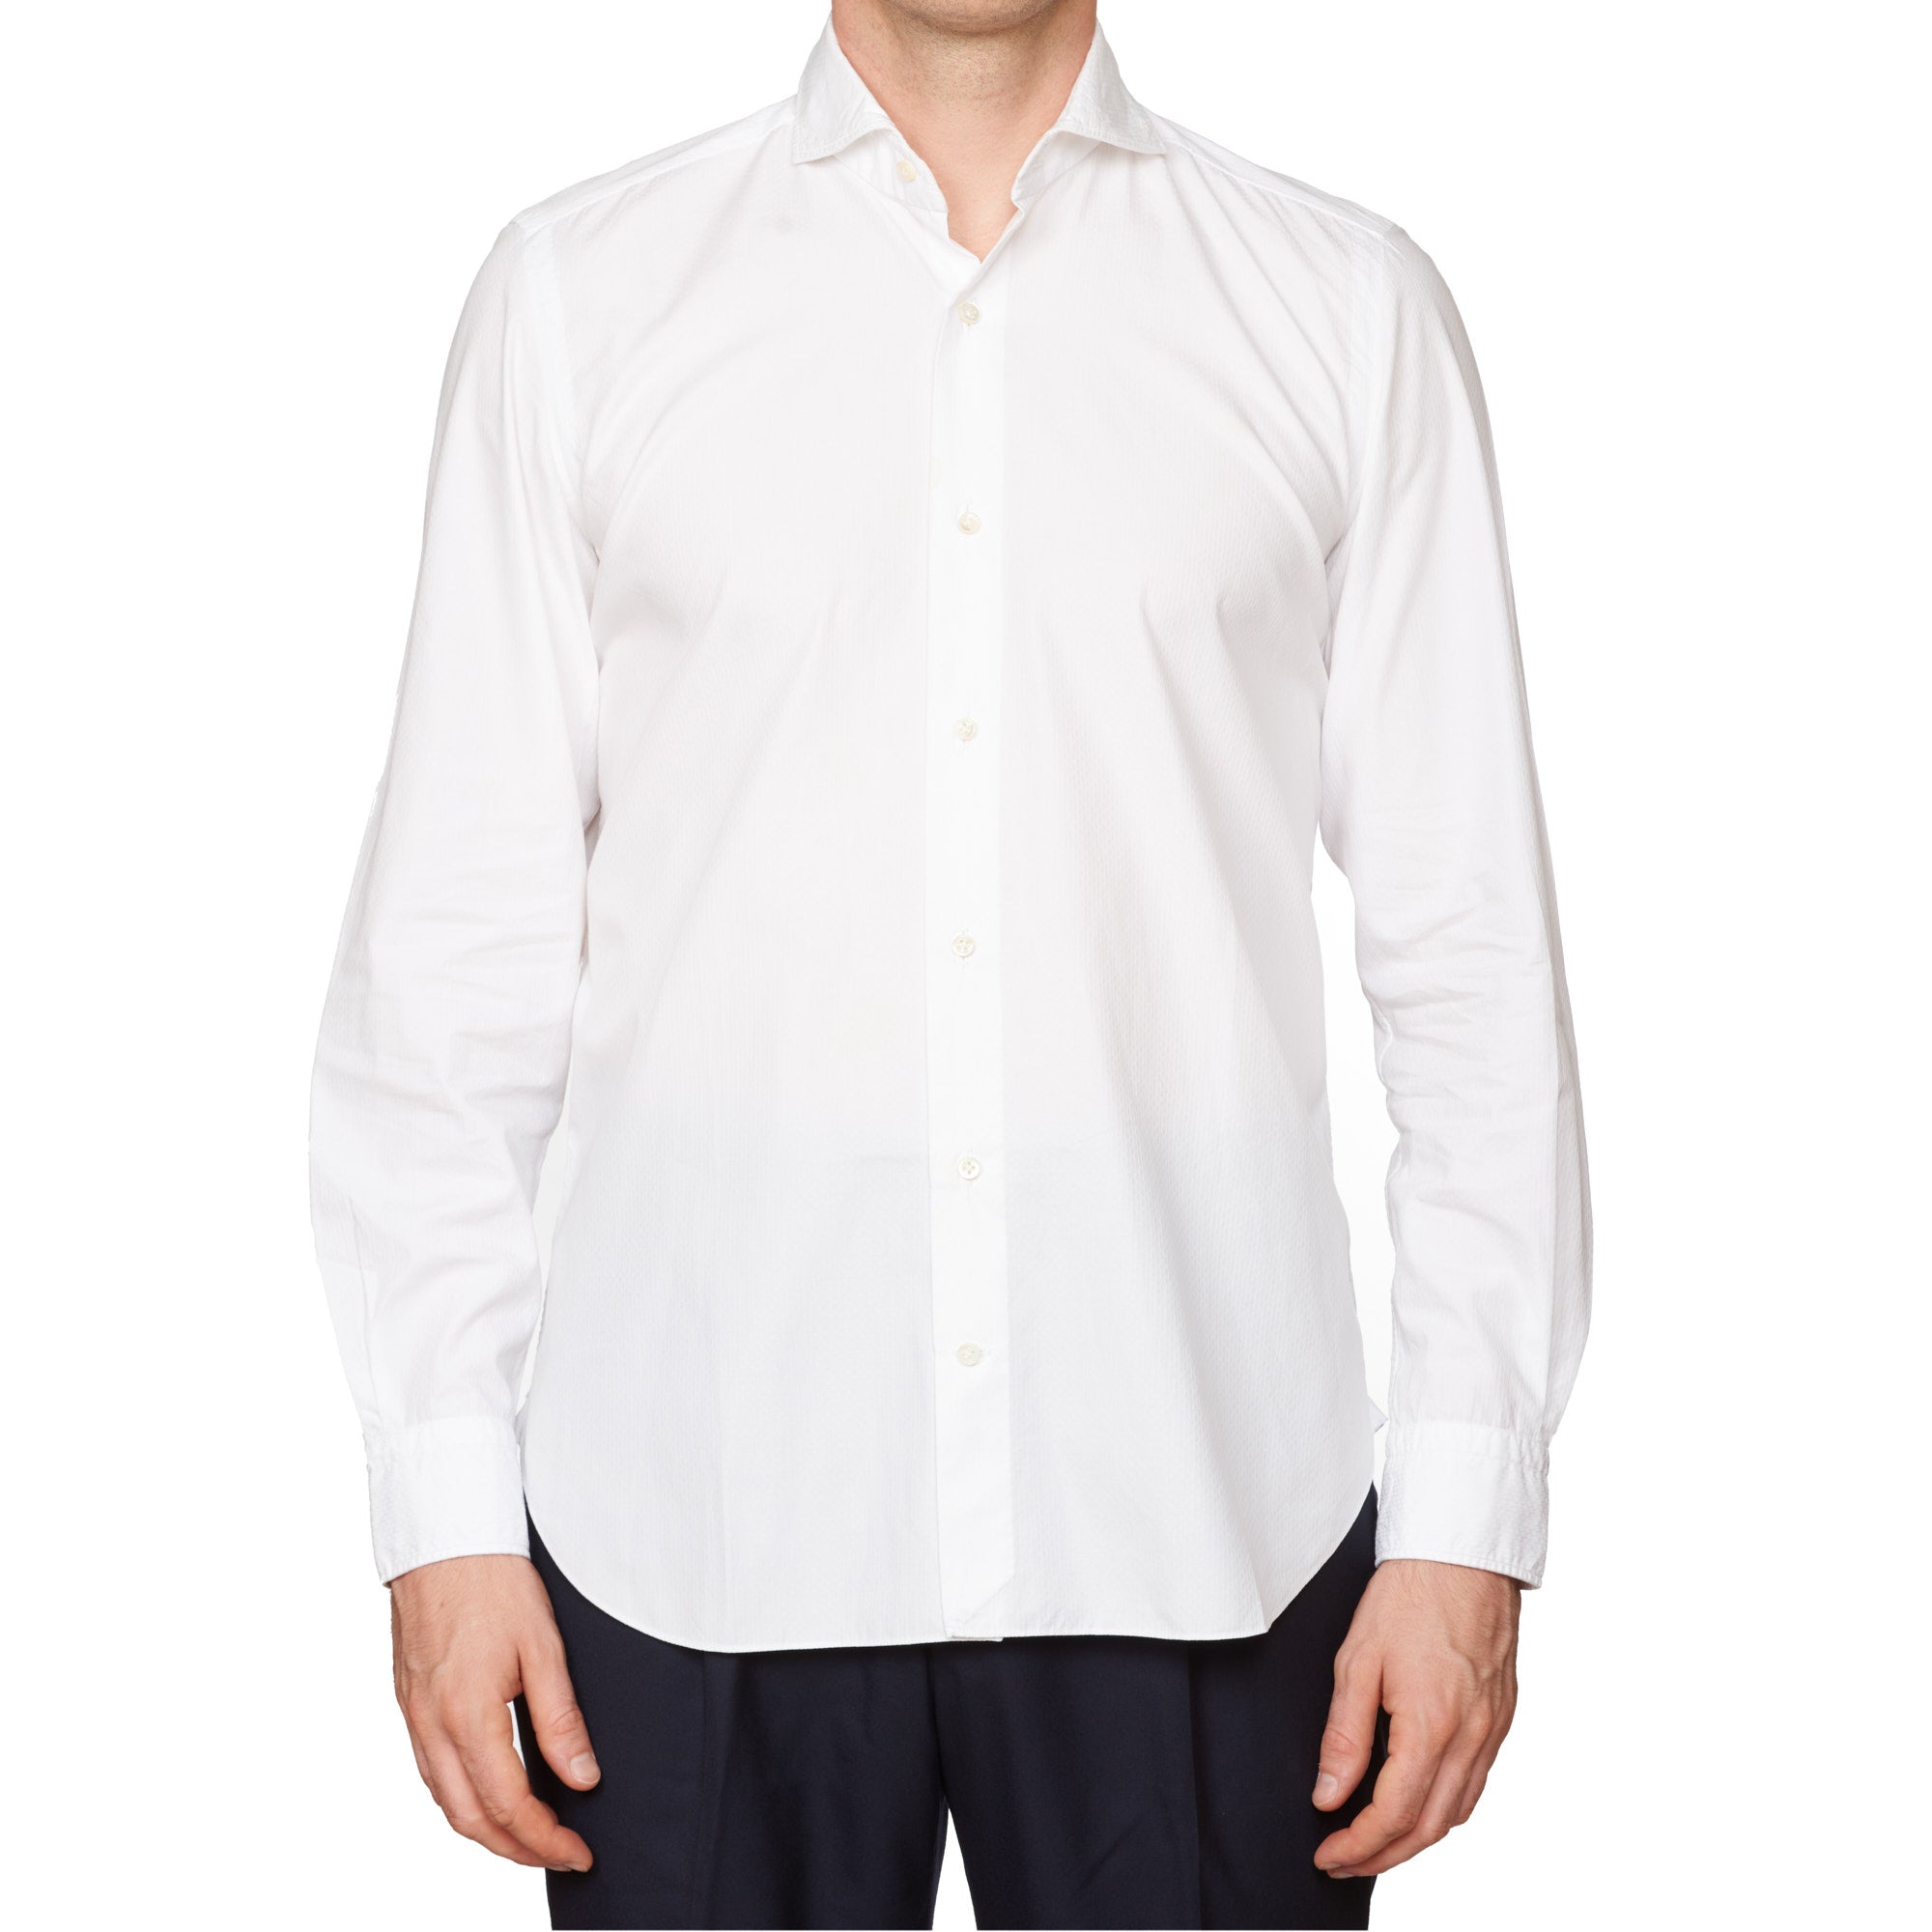 VINCENZO DI RUGGIERO Handmade White Jacquard Cotton Dress Shirt EU 40 US 15.75 VINCENZO DI RUGGIERO